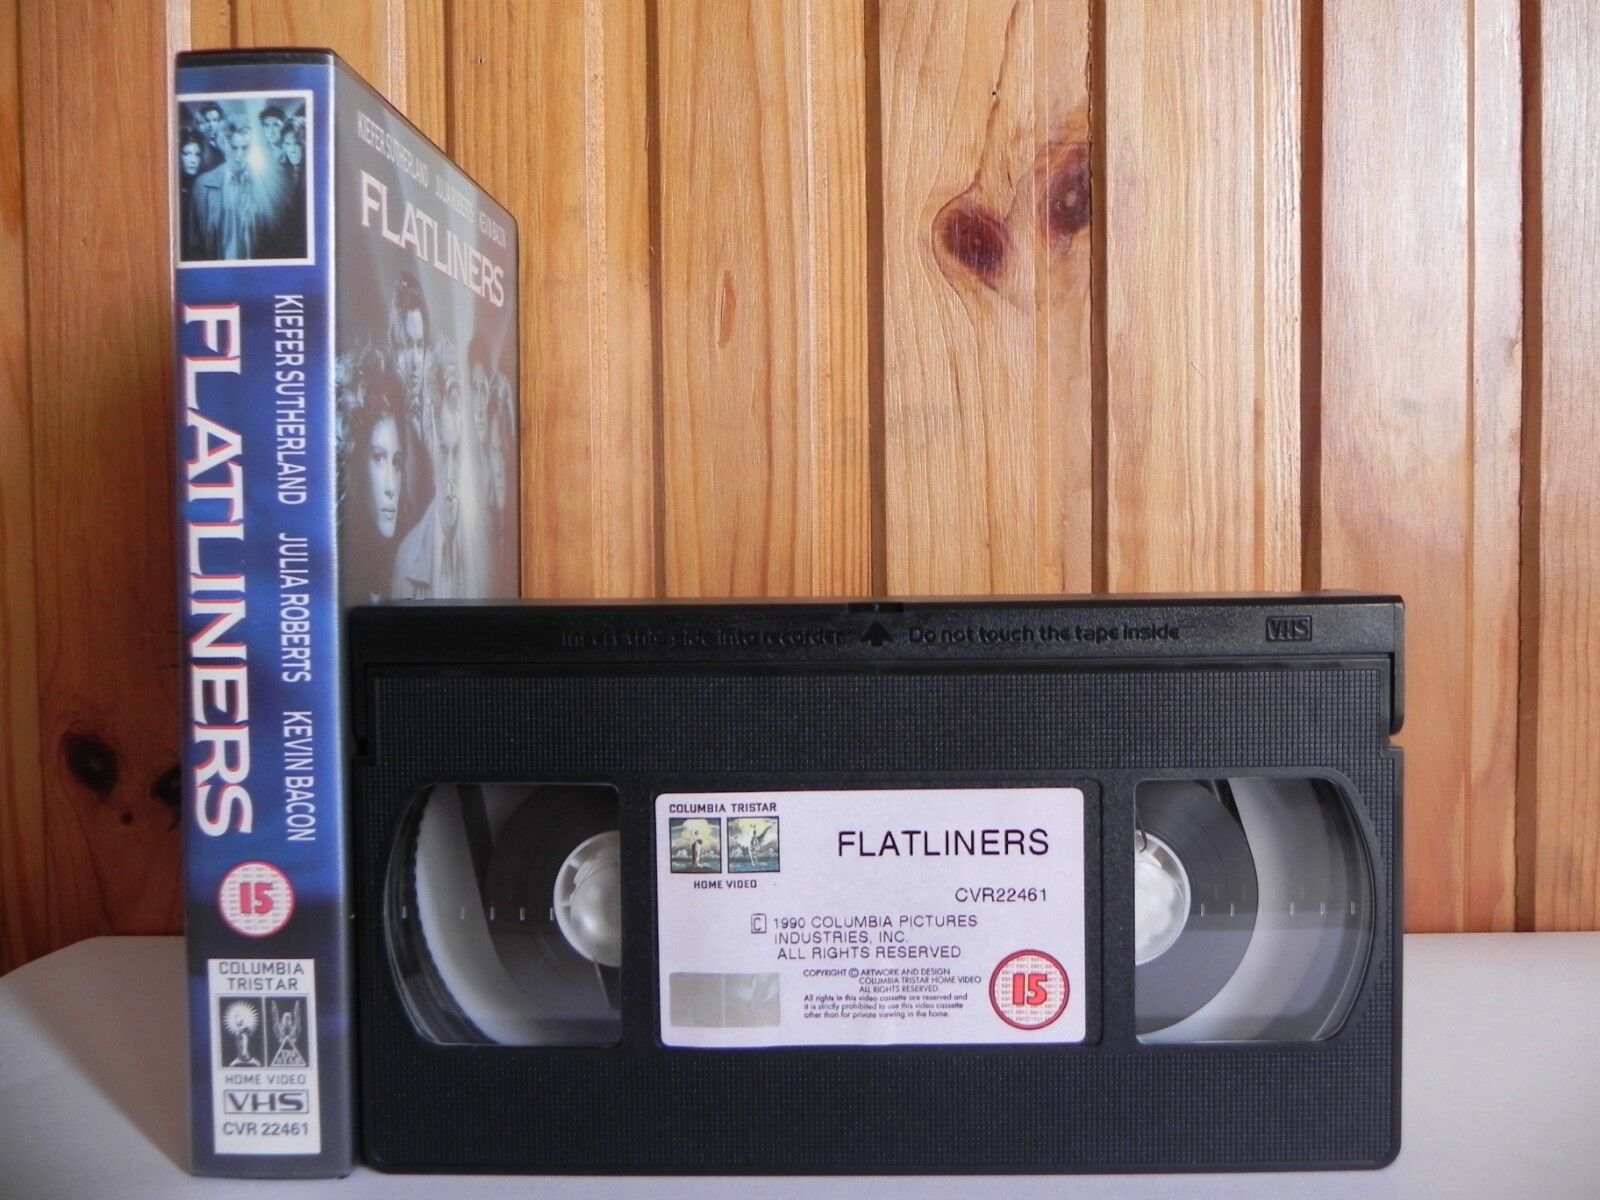 Flatliners - Columbia - Thriller - Kiefer Sutherland - Julia Roberts - Pal VHS-